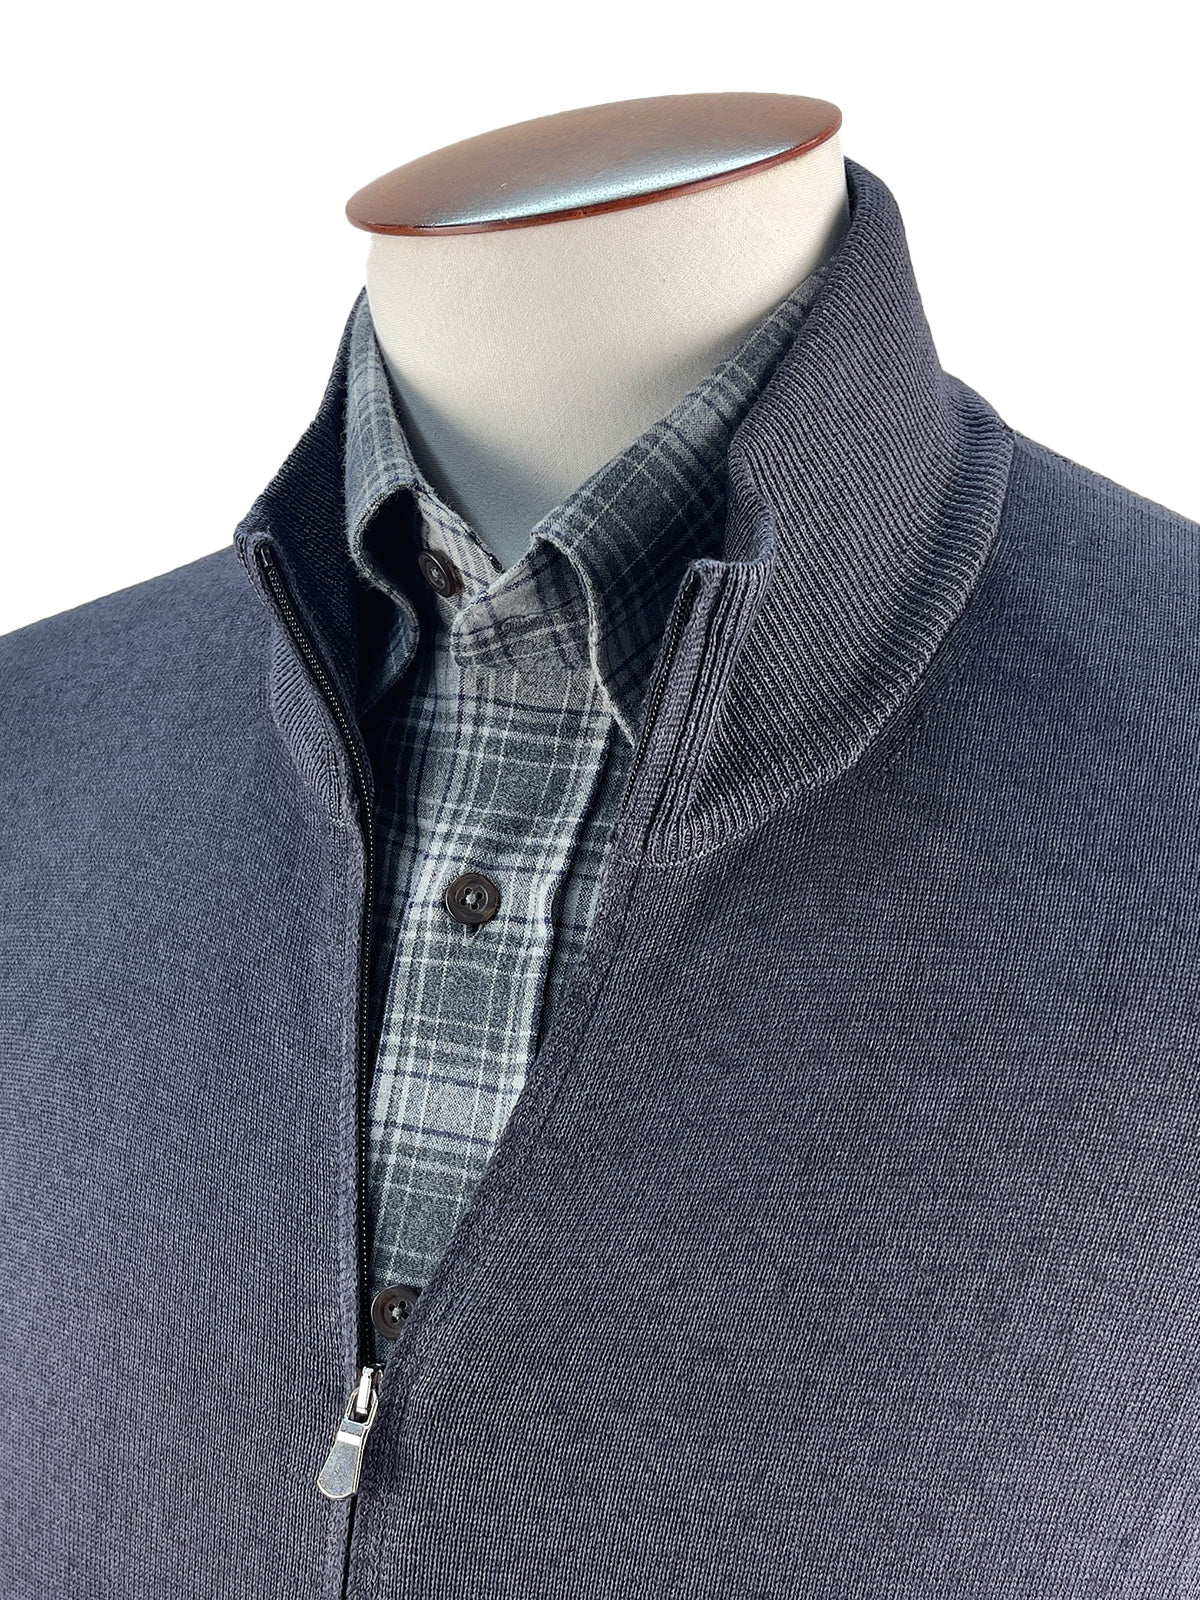 Carbon Merino Wool Zip Sweater